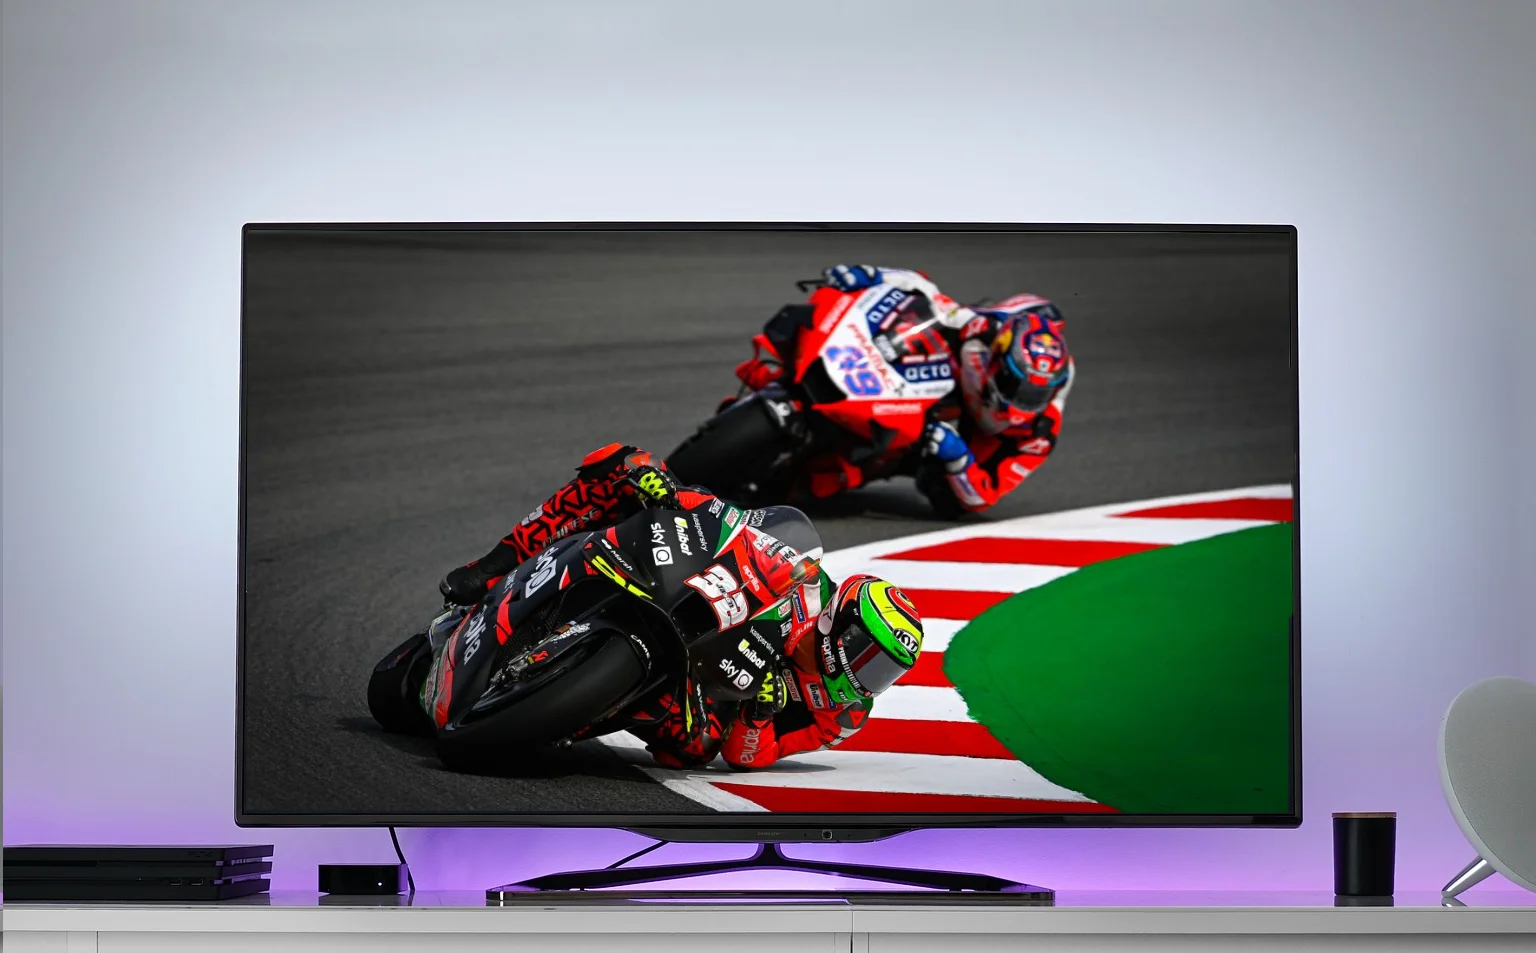 MotoGP WorldSBK on TV